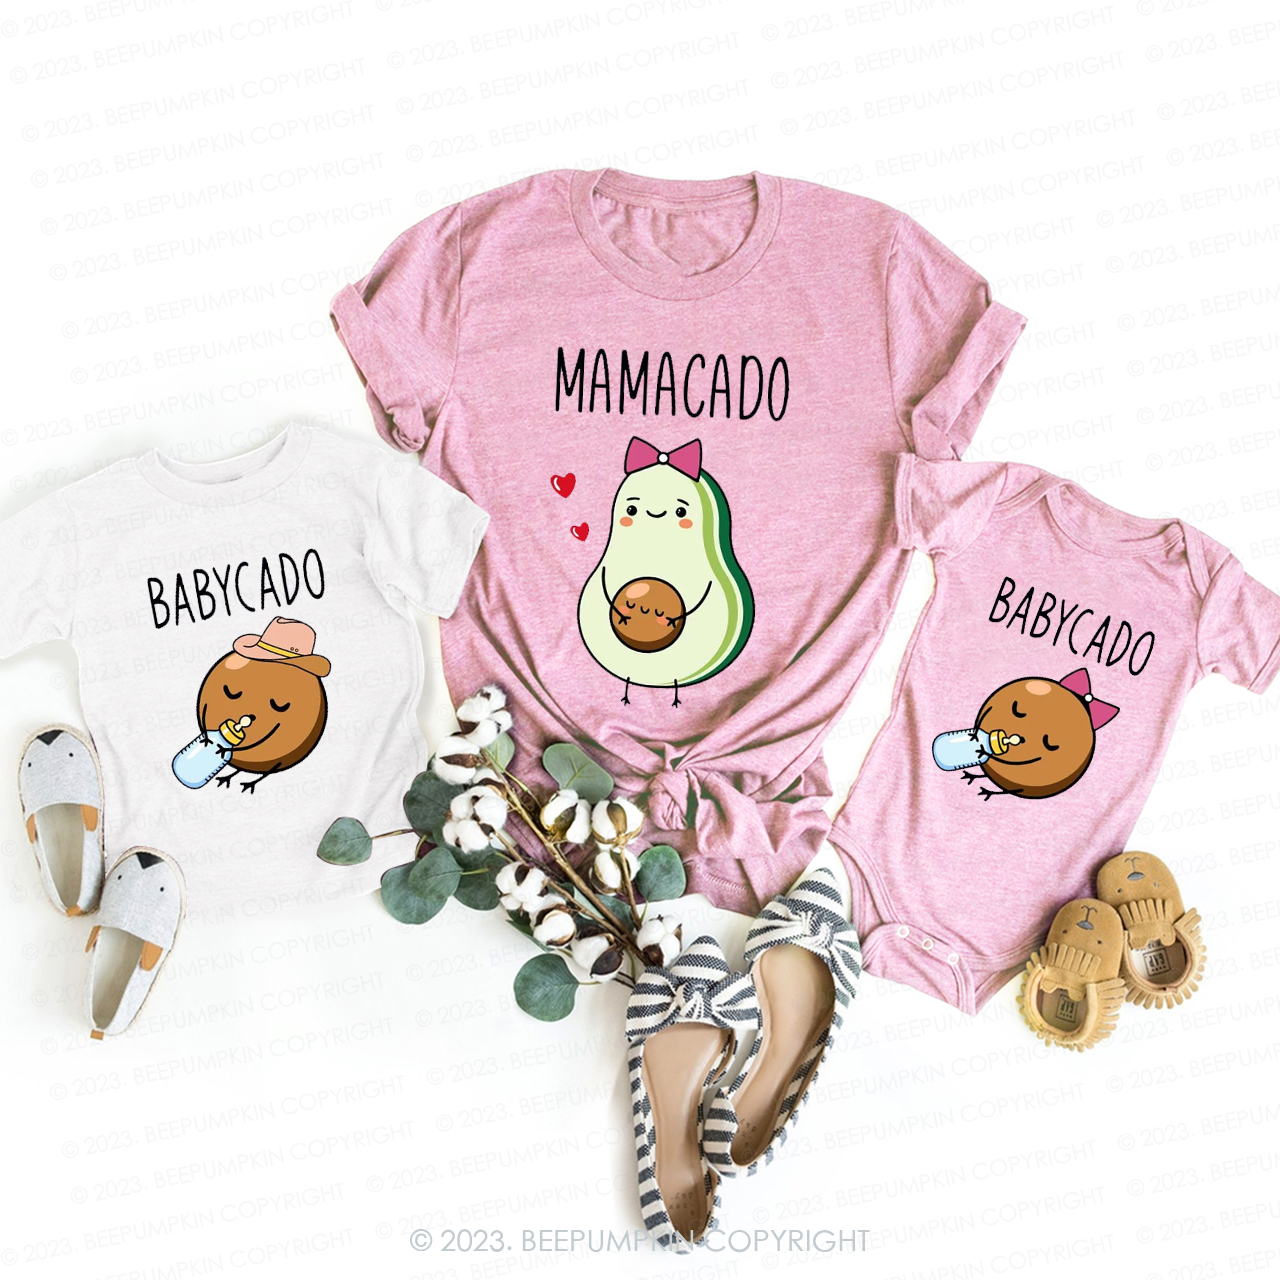 Mamacado And Babycado T-Shirts For Mom&Me